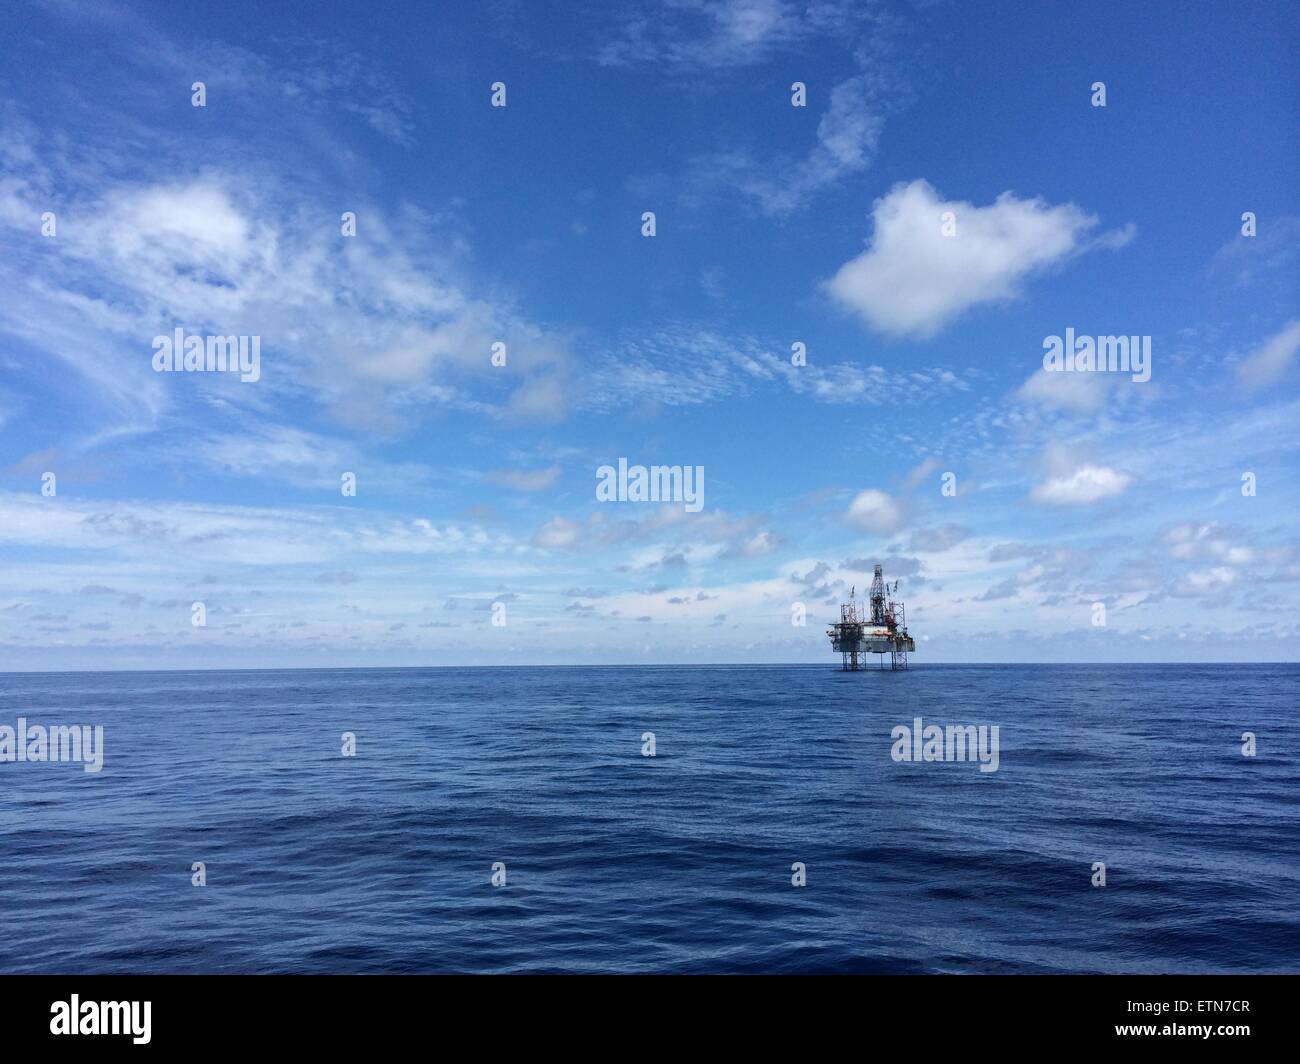 Offshore jackup platform at sea Stock Photo